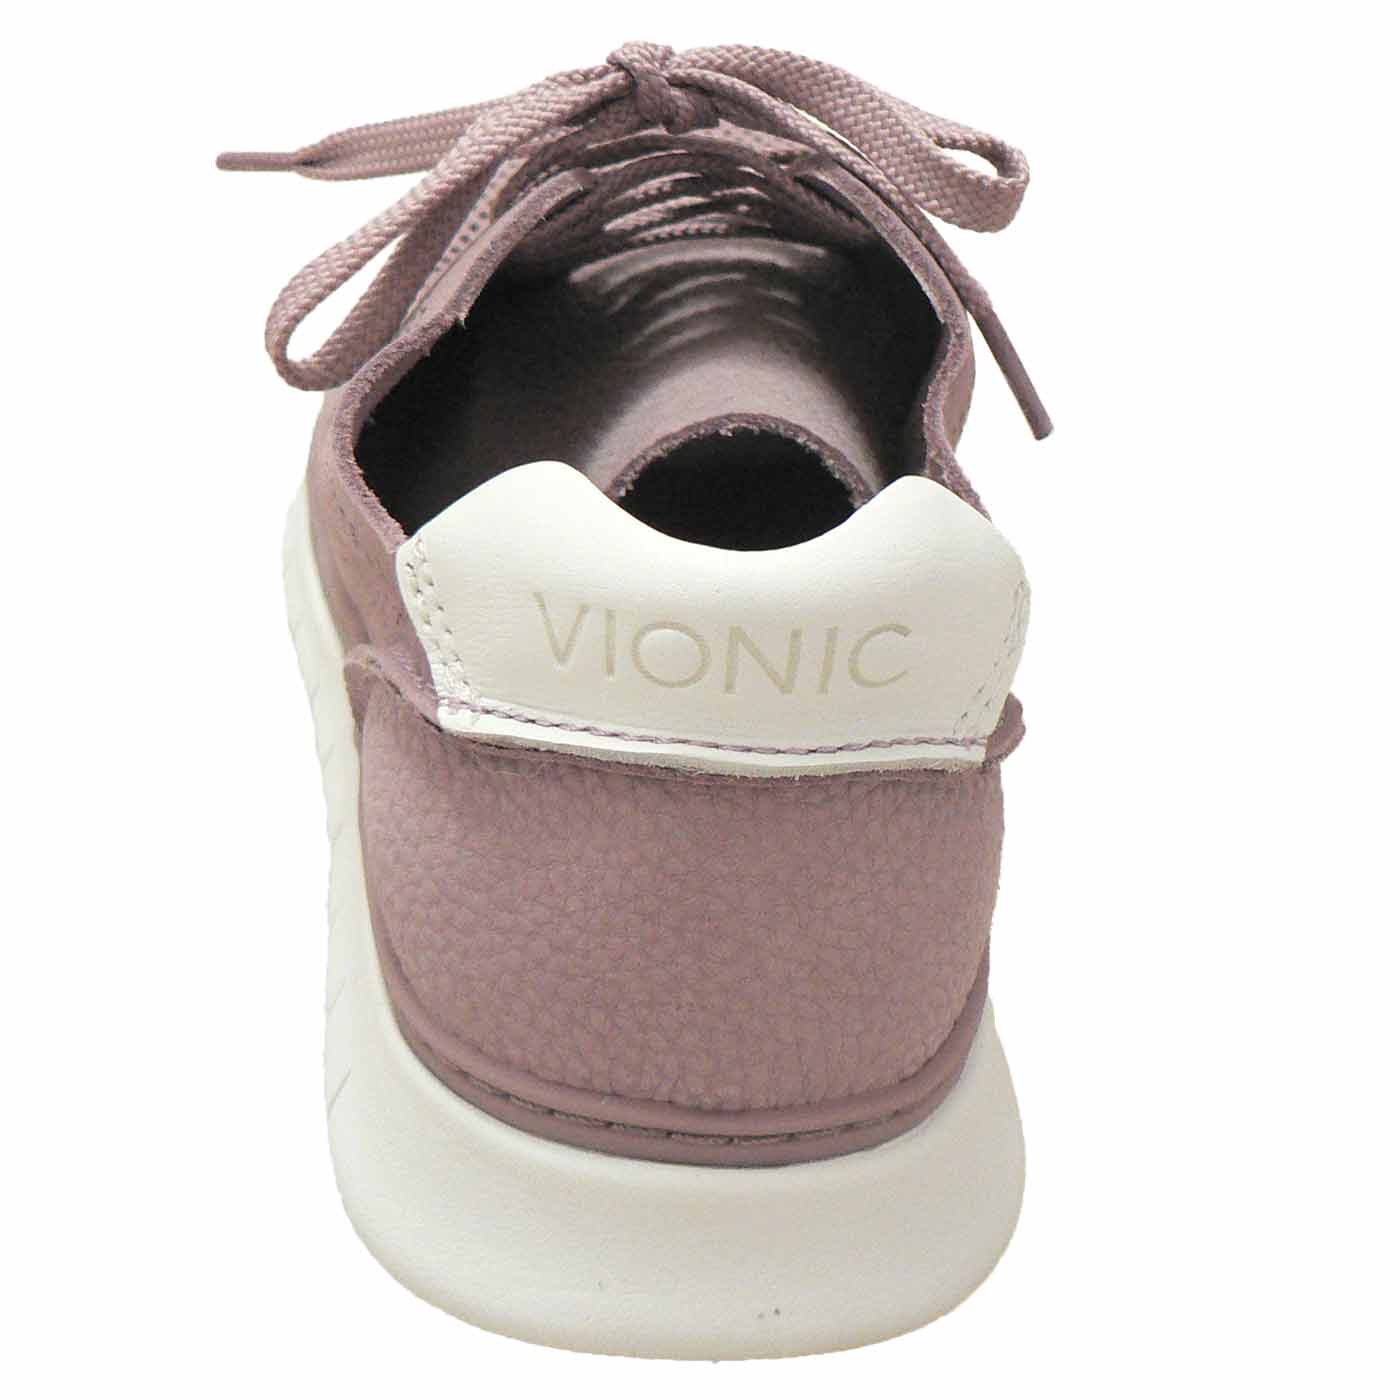 vionic joey casual sneaker